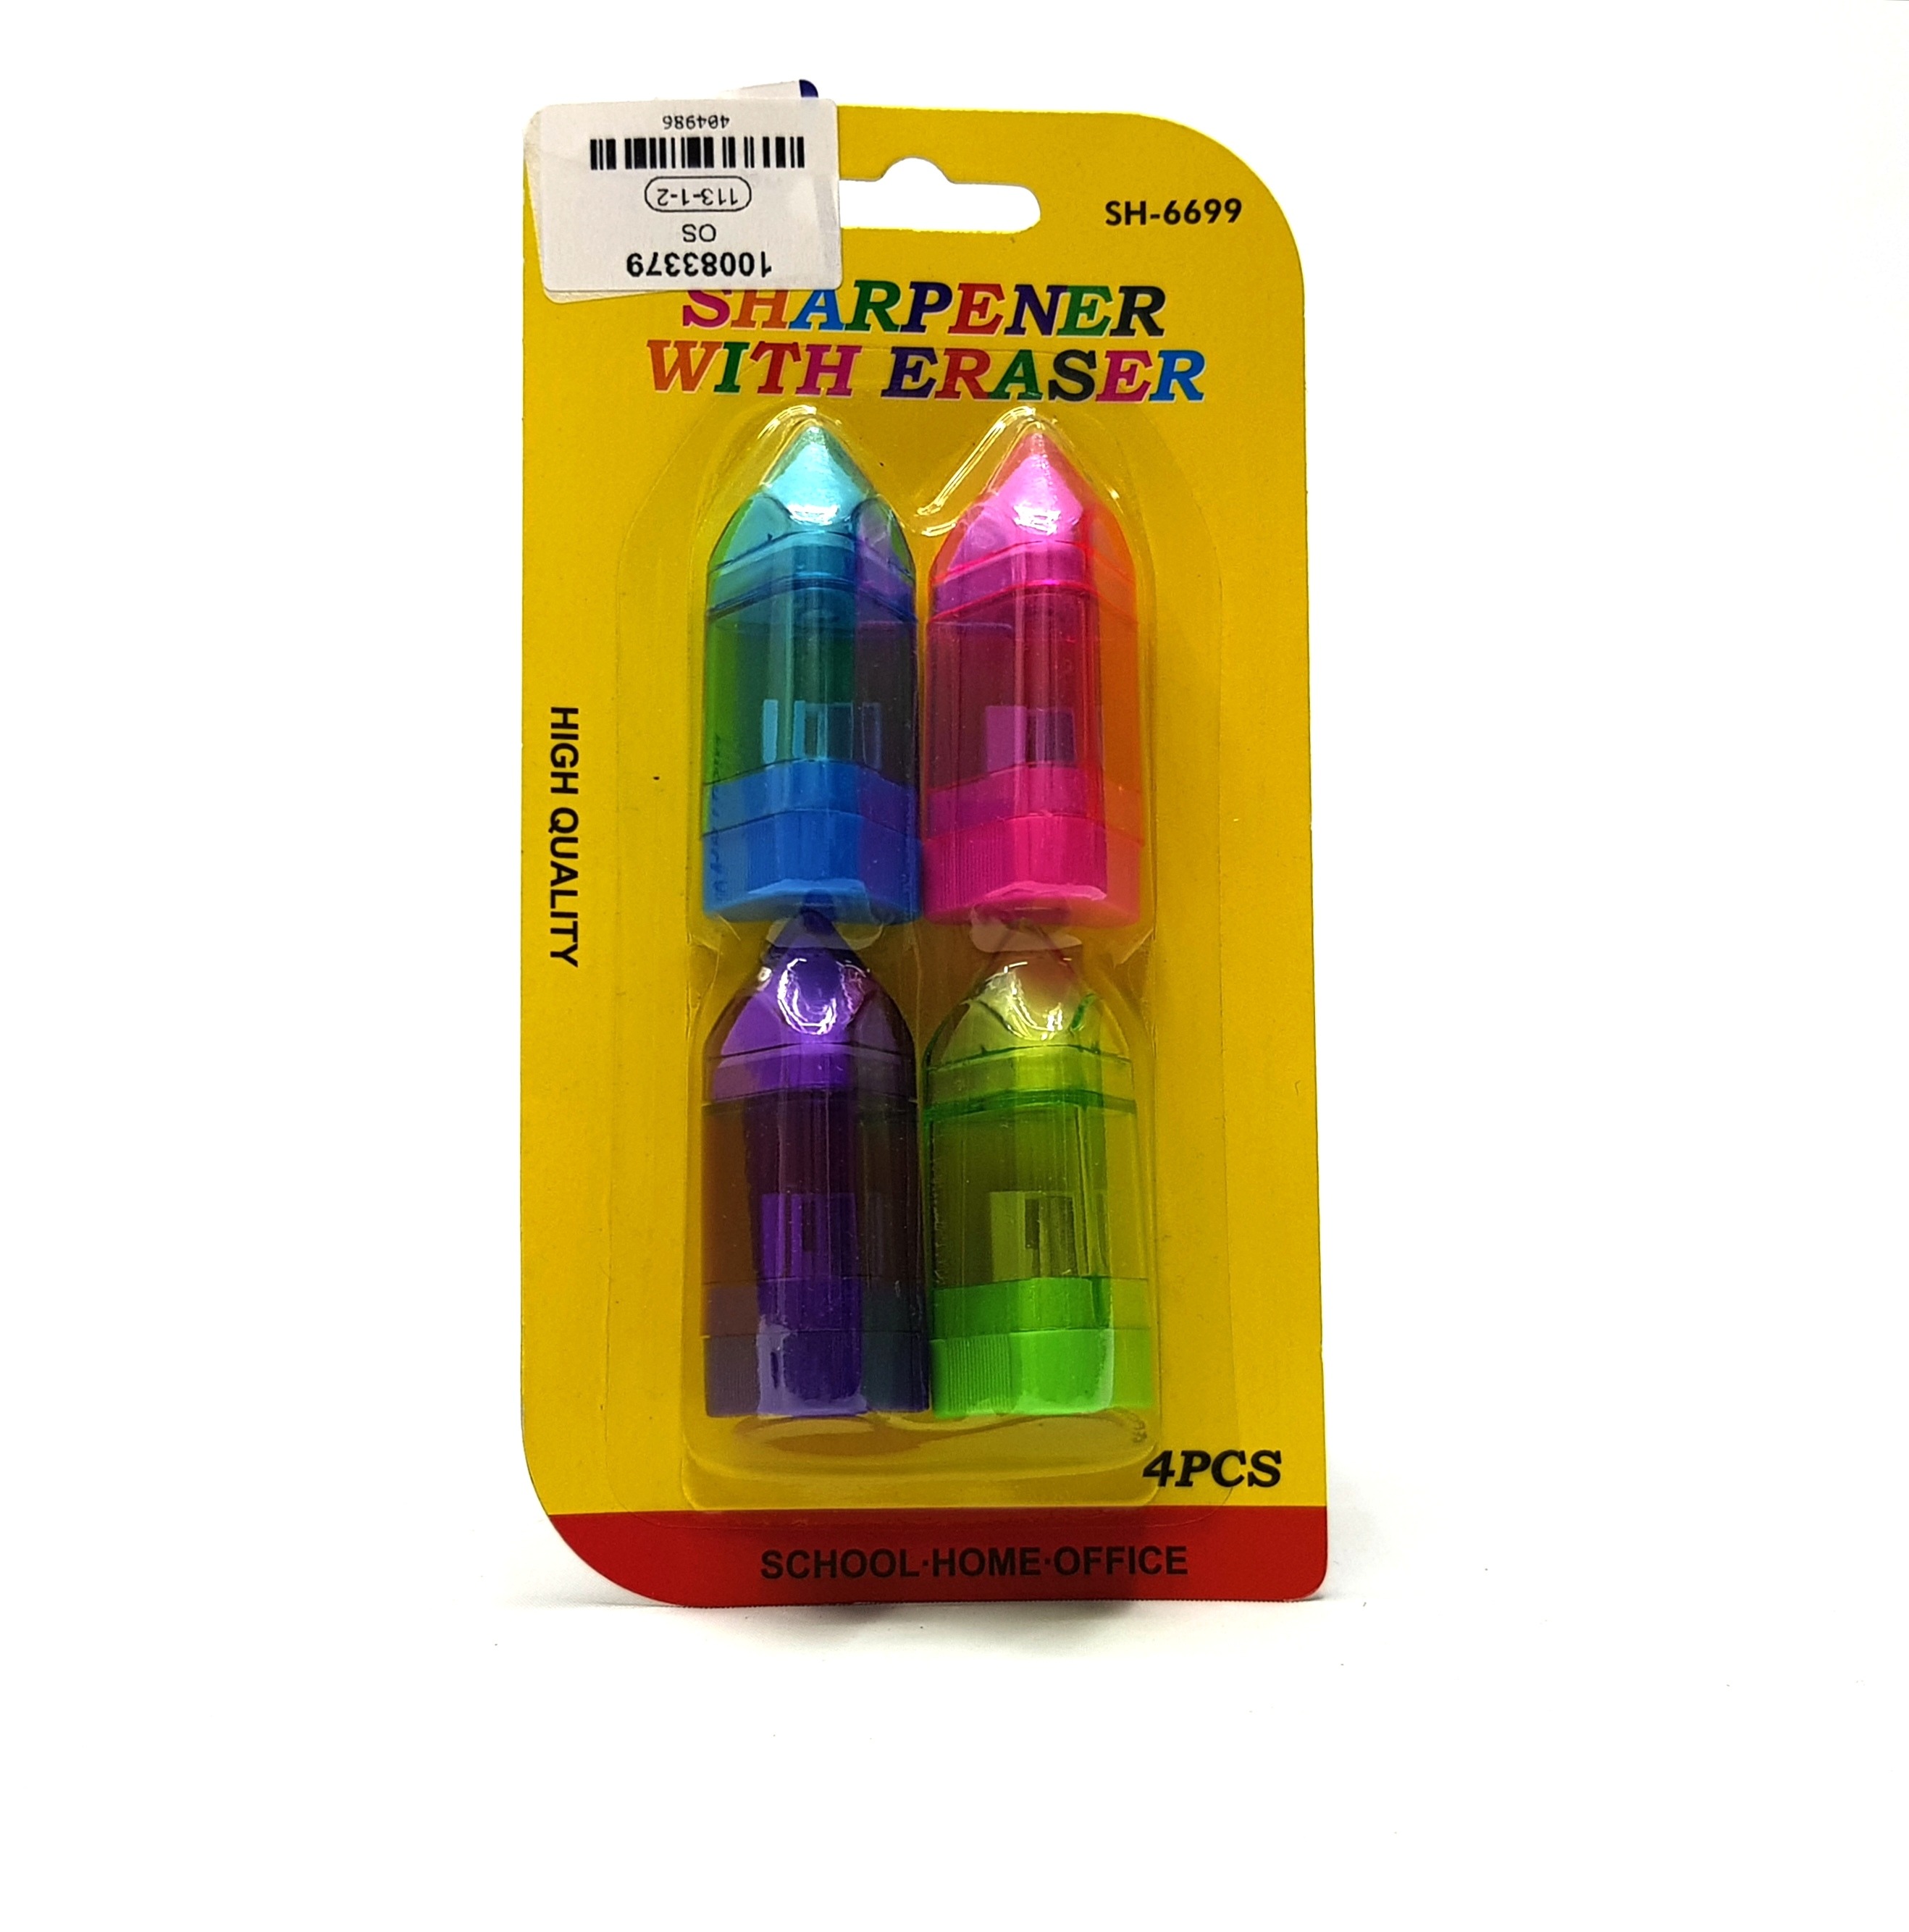 4 Pcs Pack High Quality Sharpener With Eraser